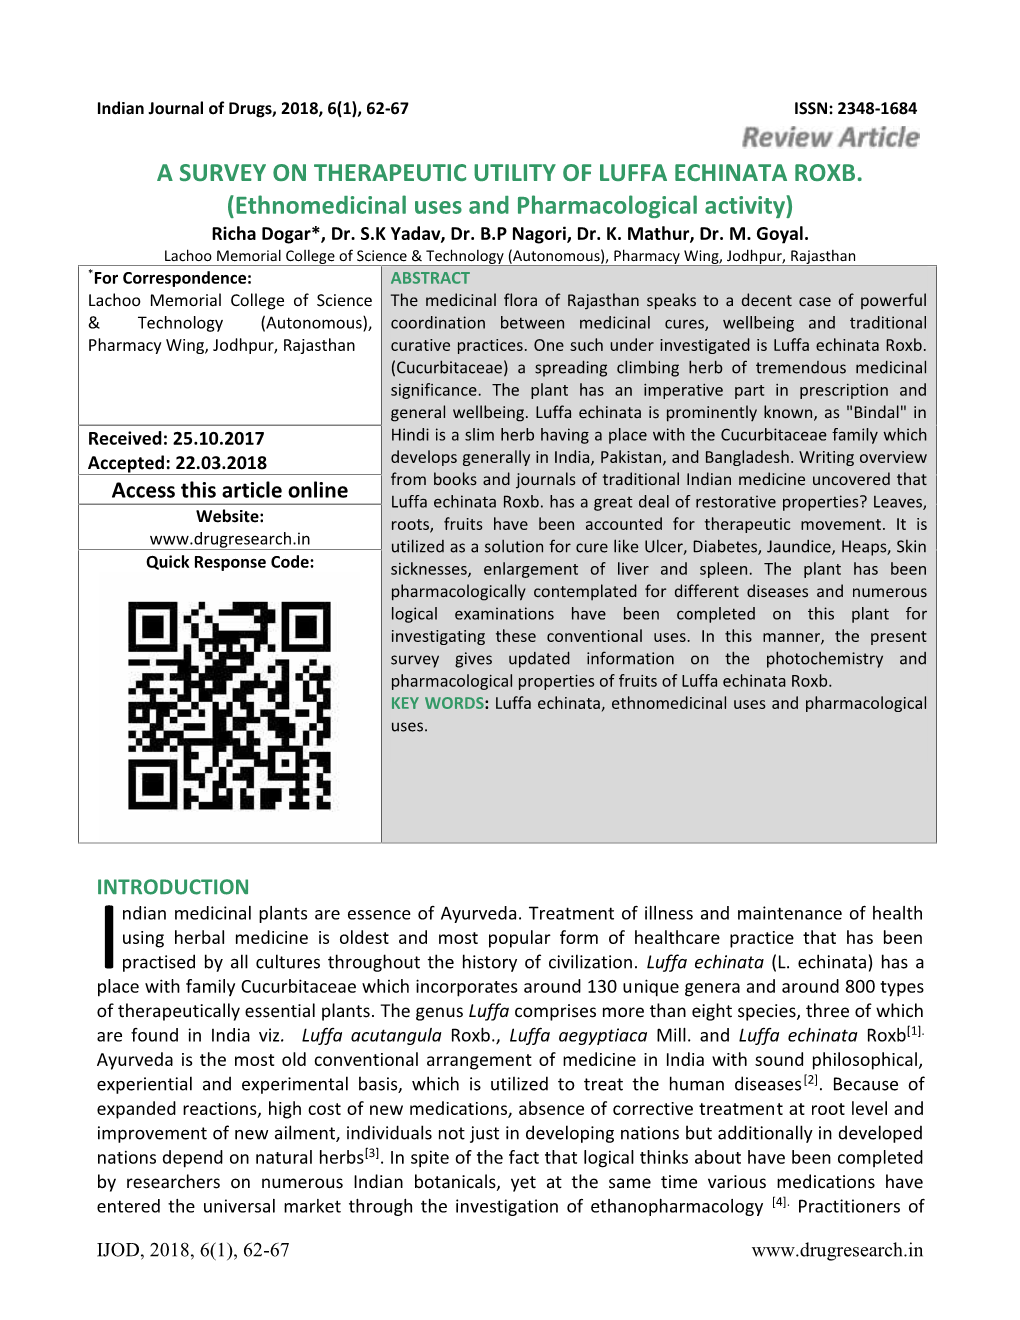 A Survey on Therapeutic Utility of Luffa Echinata Roxb